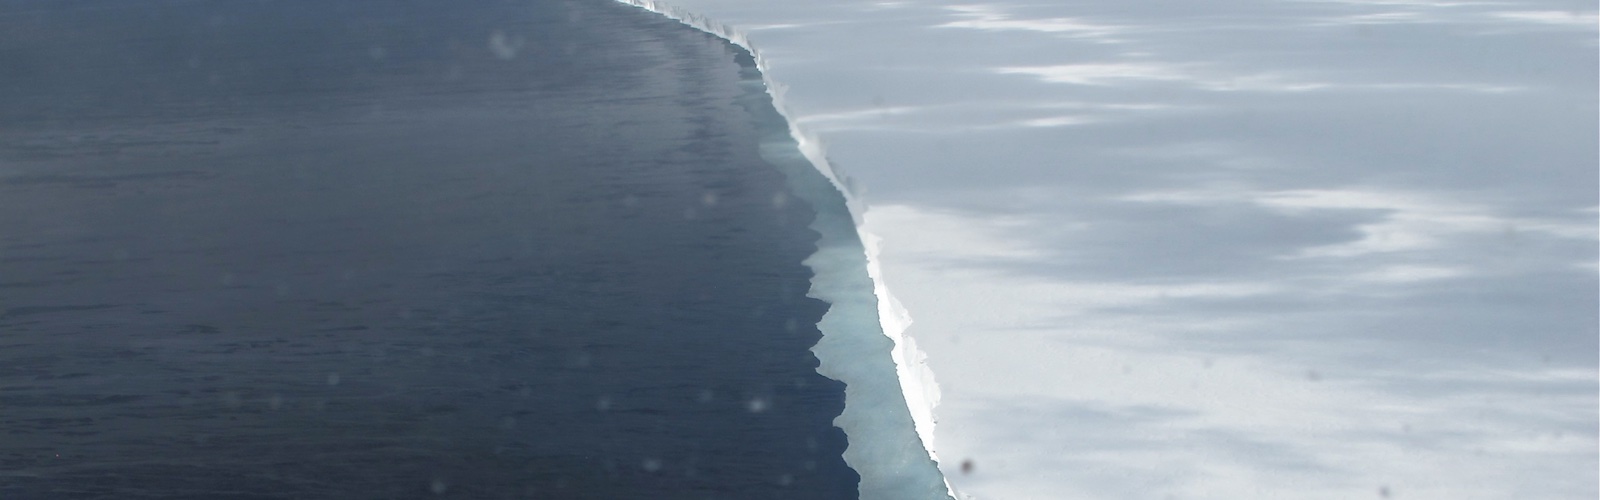 slide 1 - How Ice-Shelf Loss Drives Sea Level Rise